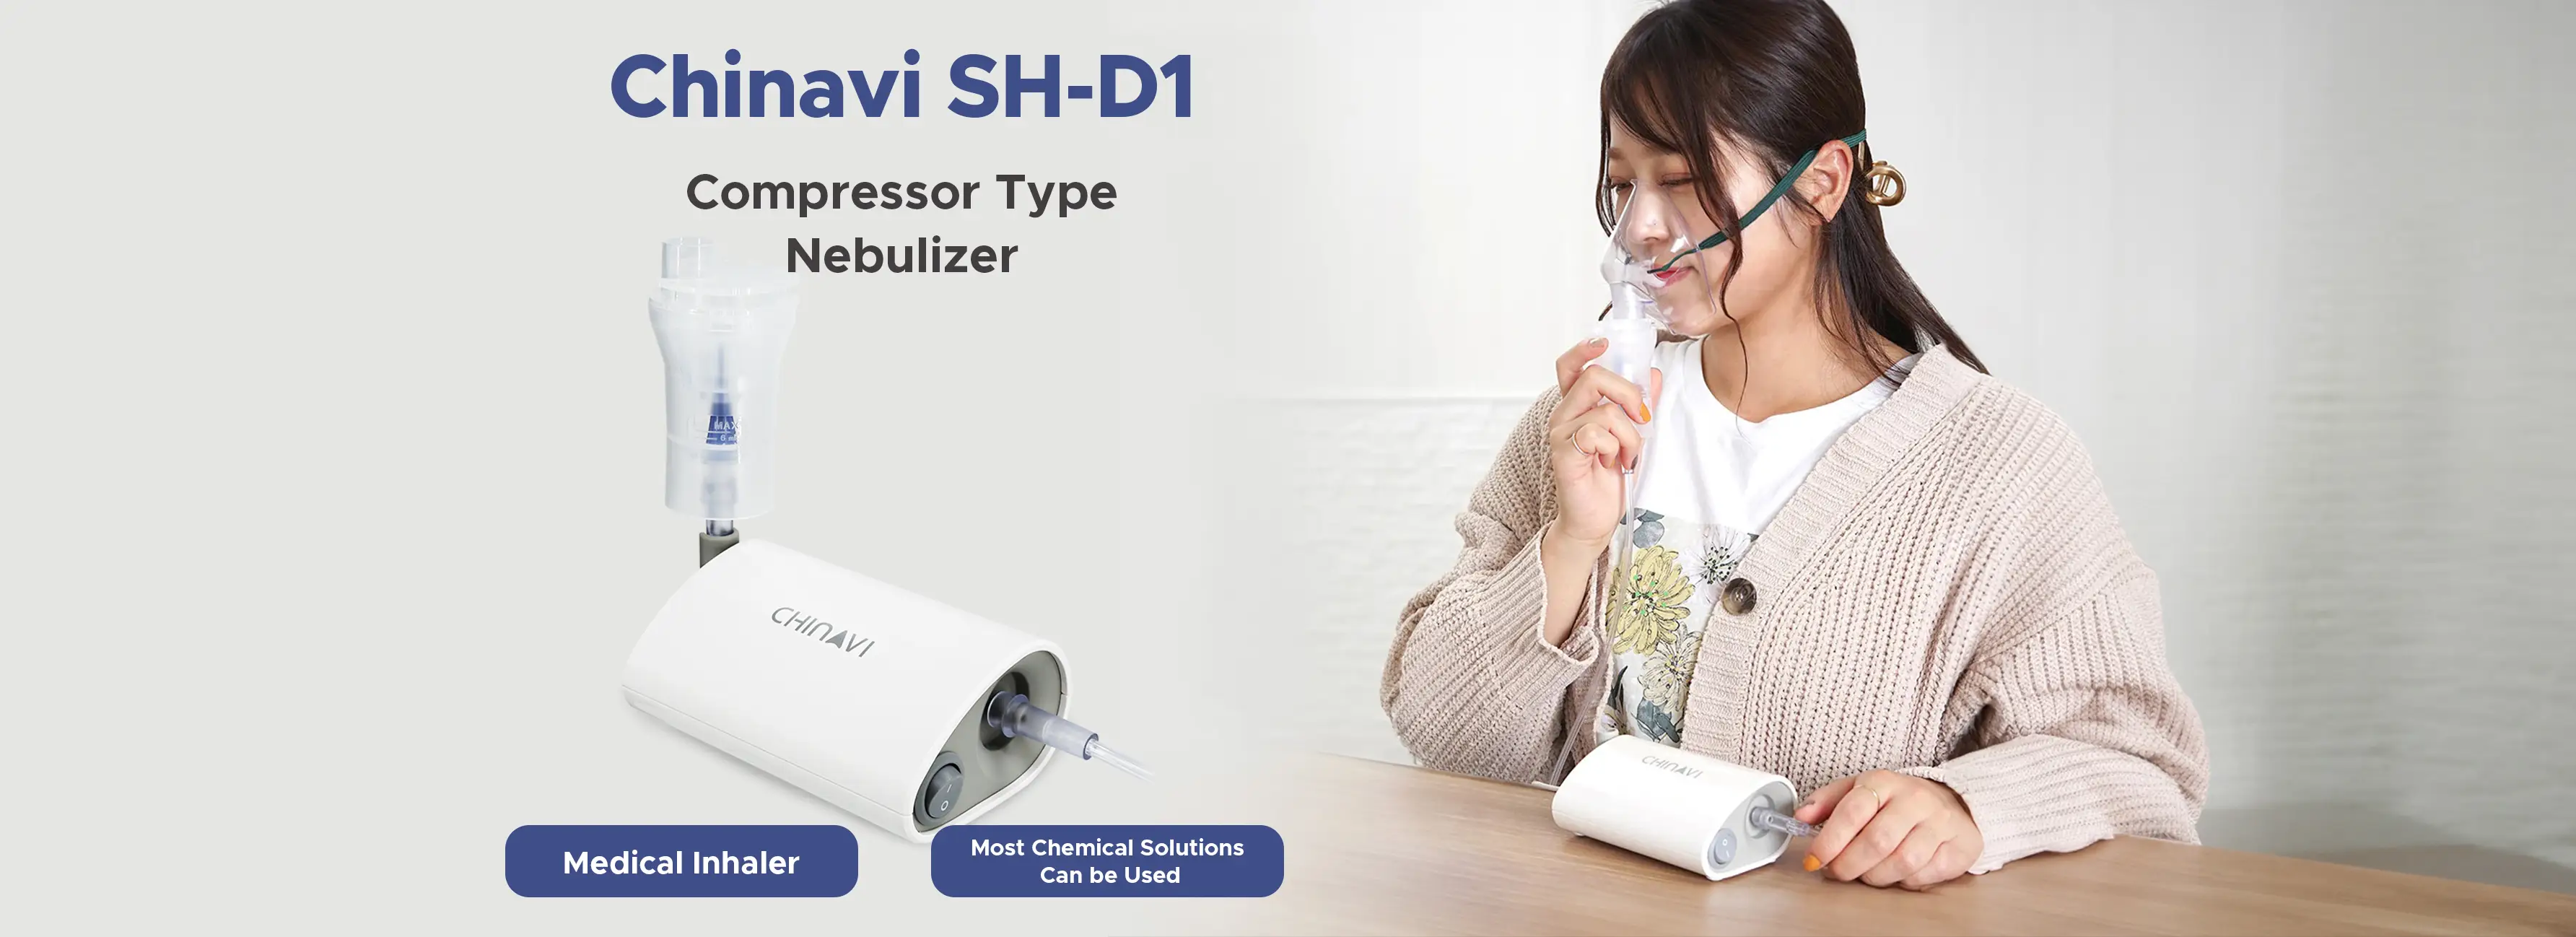 imed,interlinkmedical,chinavi,sh-d1,Compressor type nebulizer,Medical Inhaler, Most Chemical Solutions Can be Used